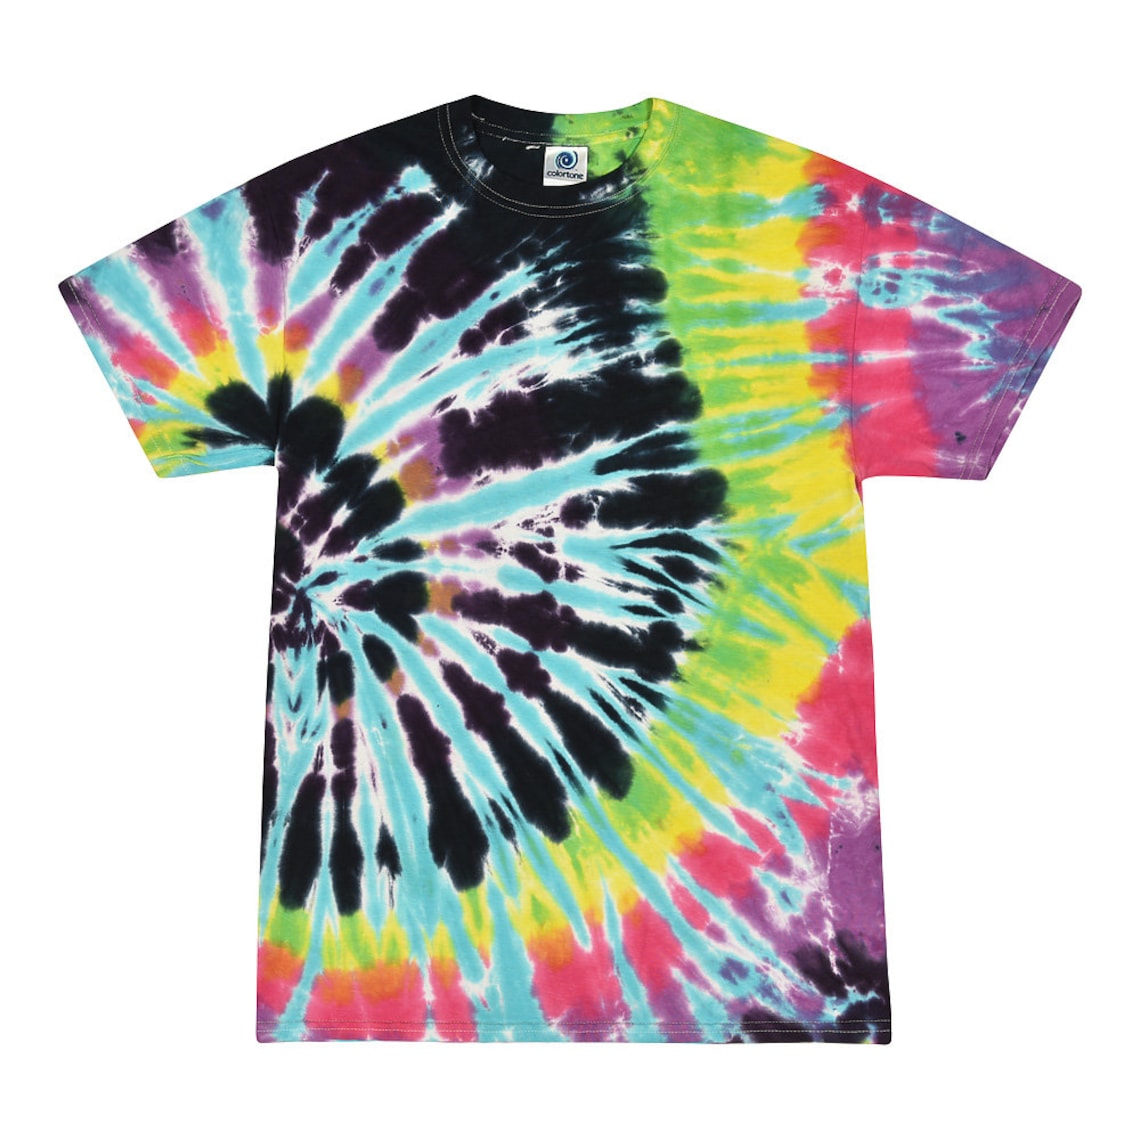 Tie Dye Neon Bright Colors Fun New T-shirts Cool Kids Size Xs | Etsy